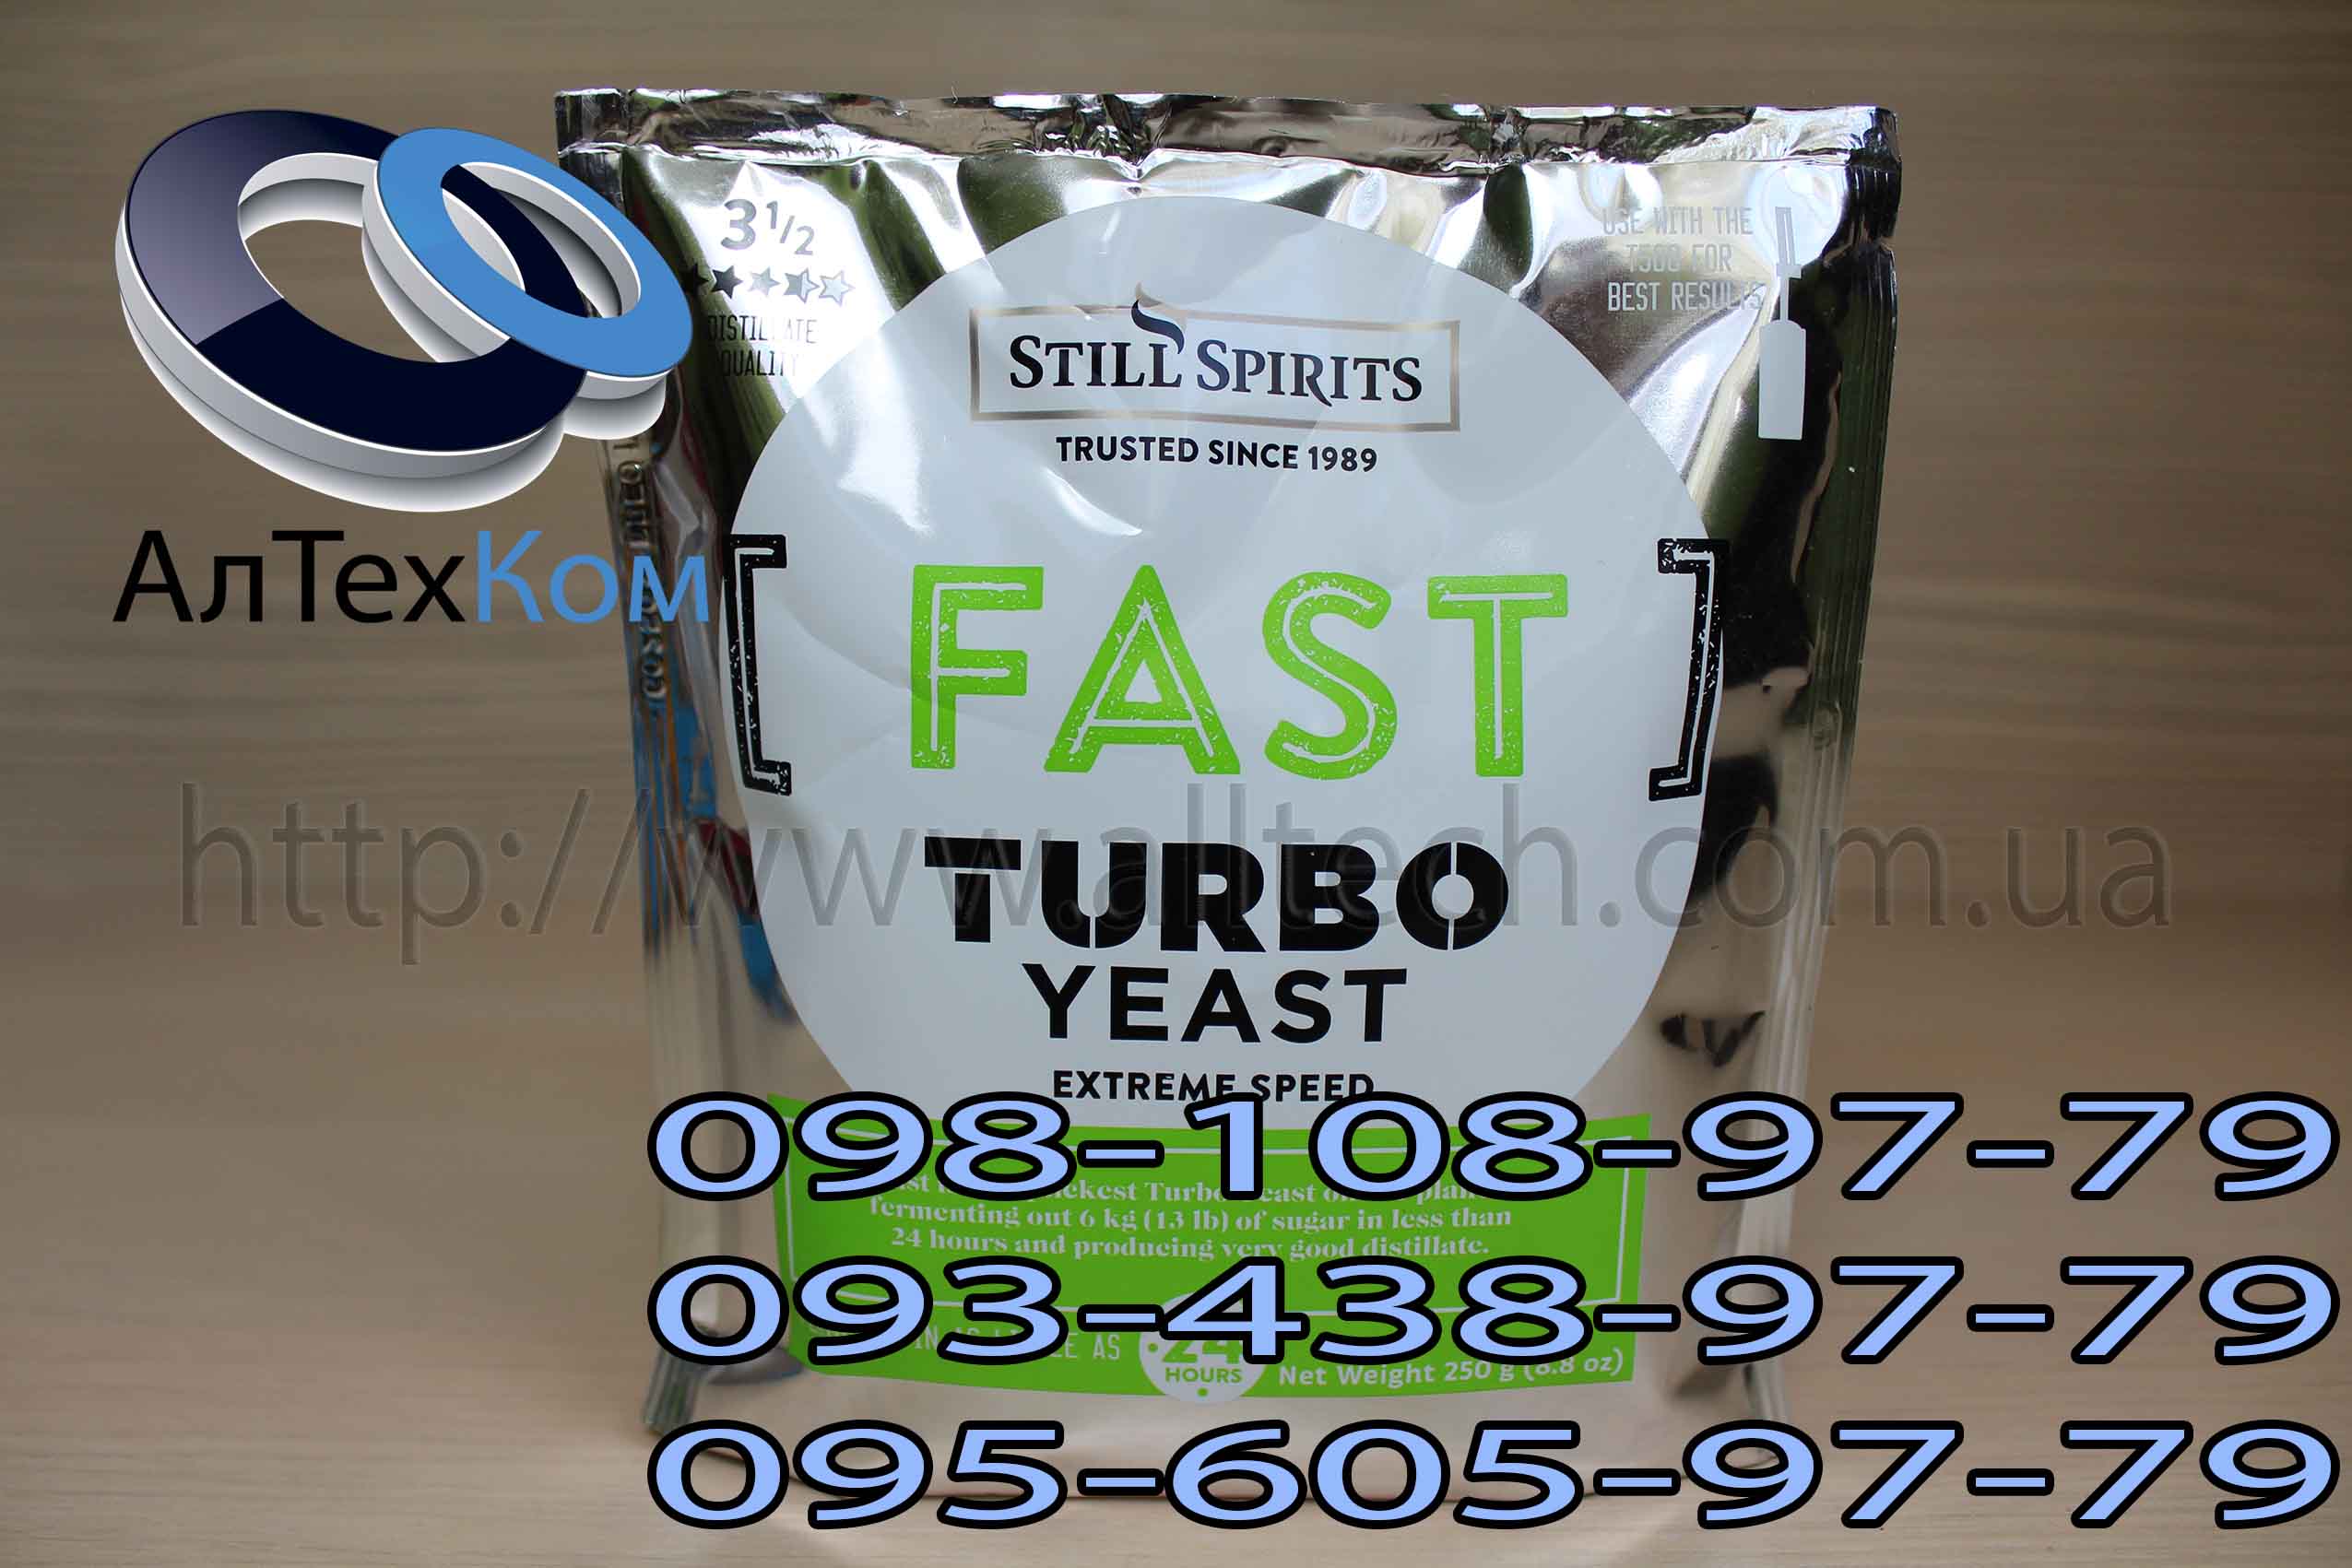  Still Spirits Fast Turbo Yeast